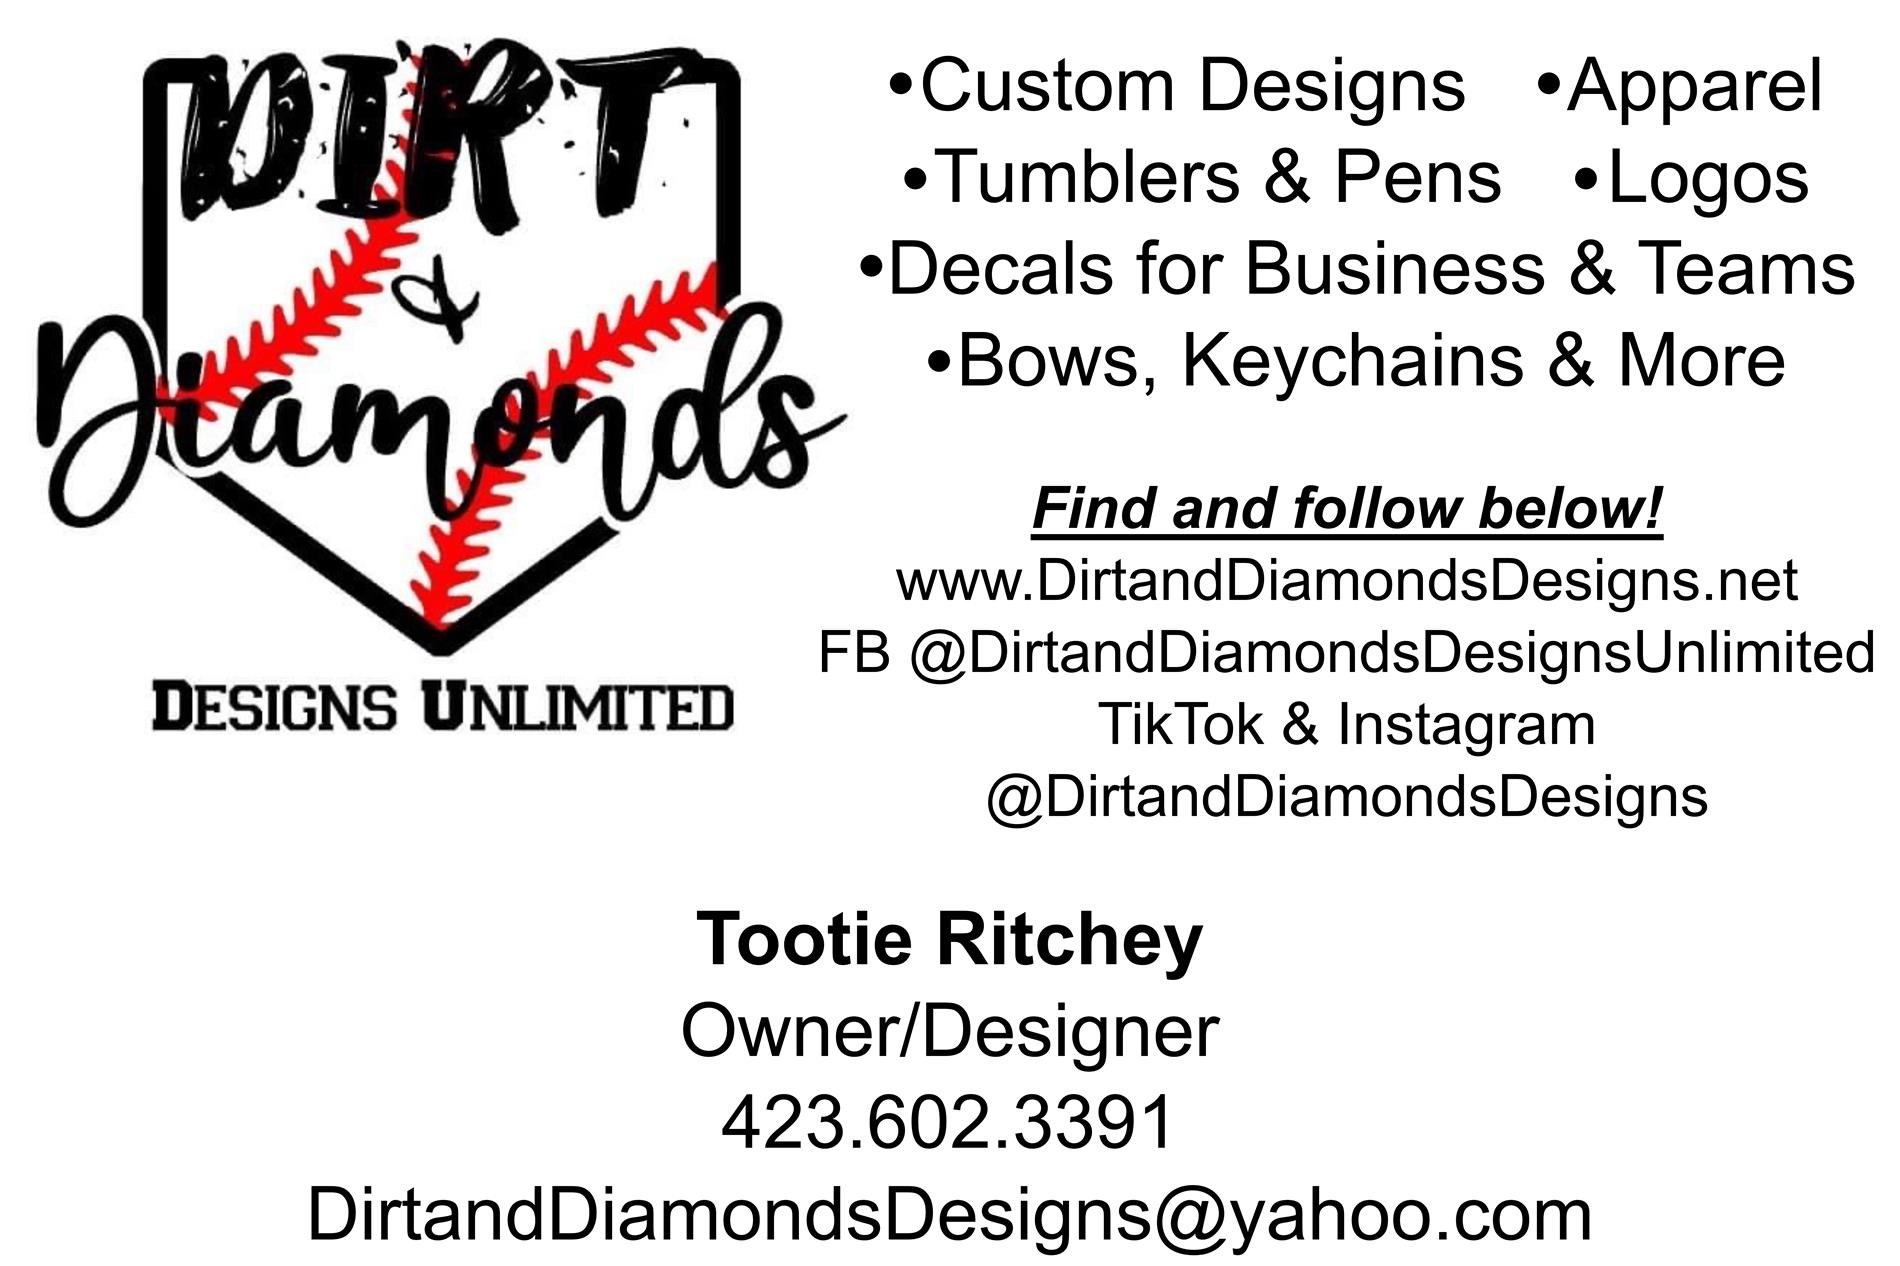 Dirt & Diamonds Designs Unlimited